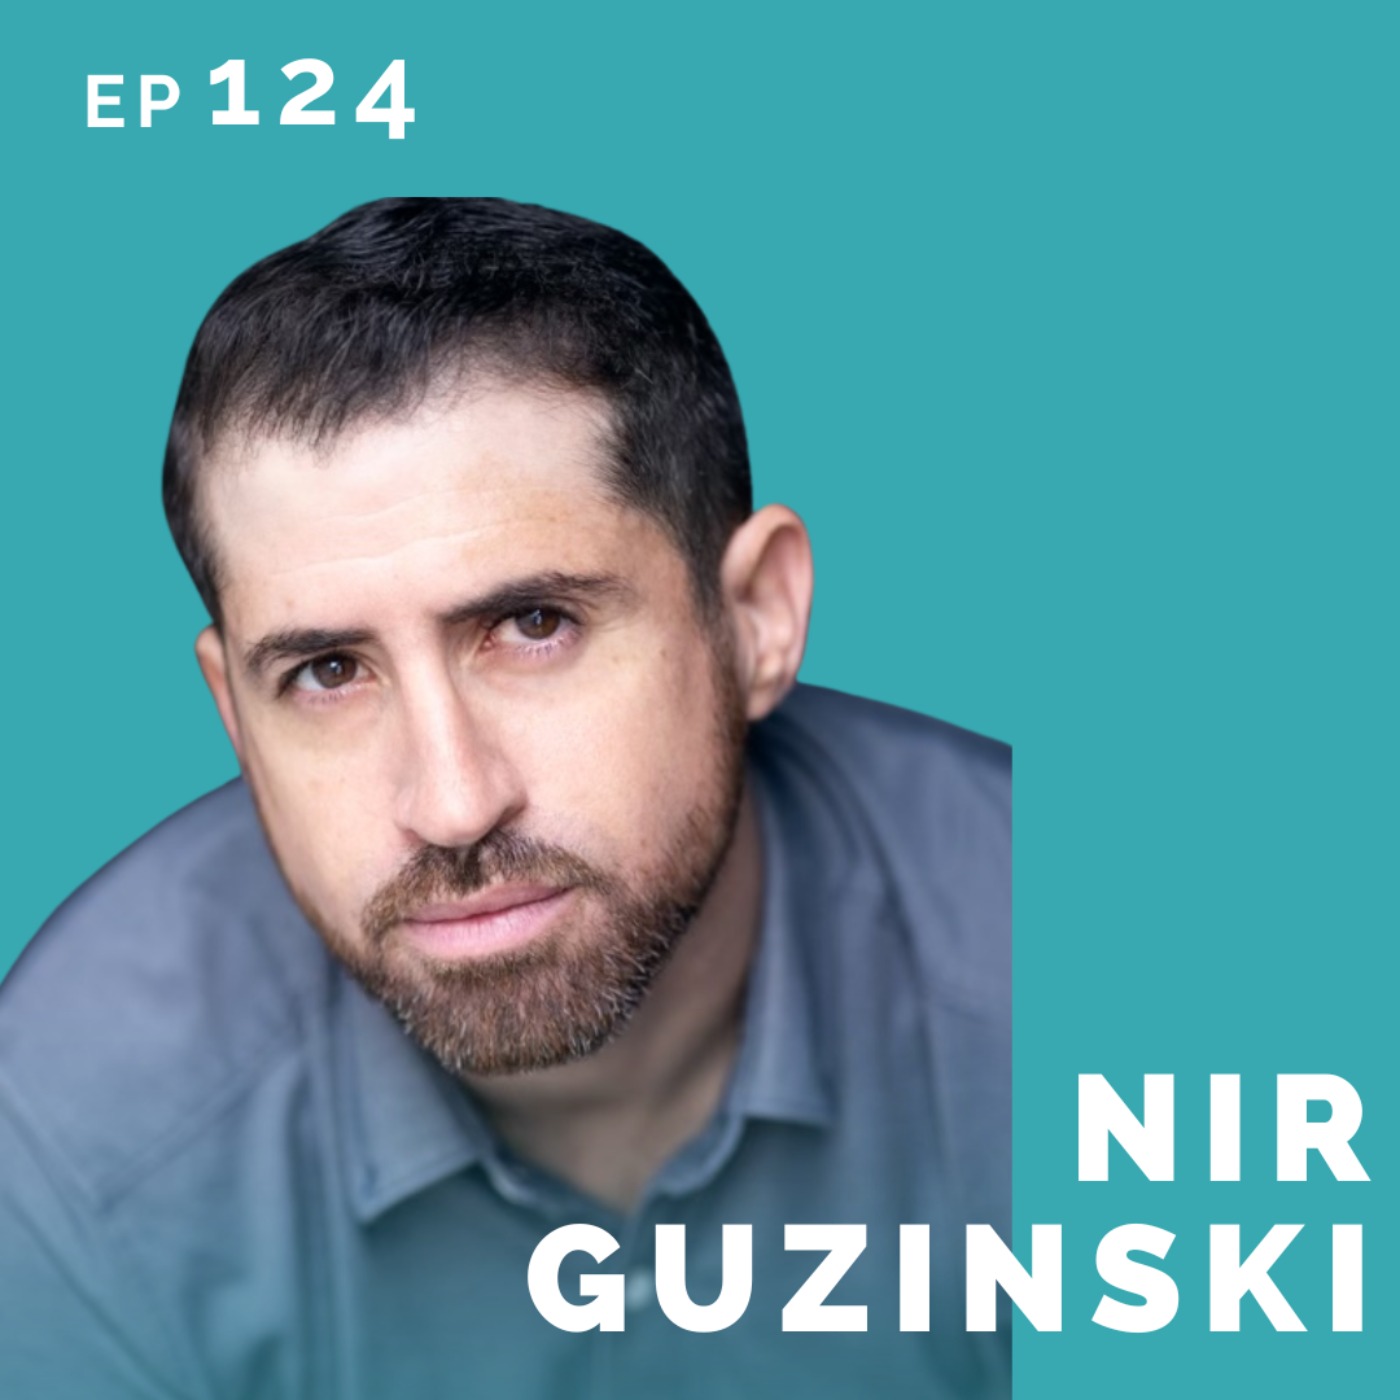 EP 124: Nir Guzinski: Shy Kid Turned Actor/Creative